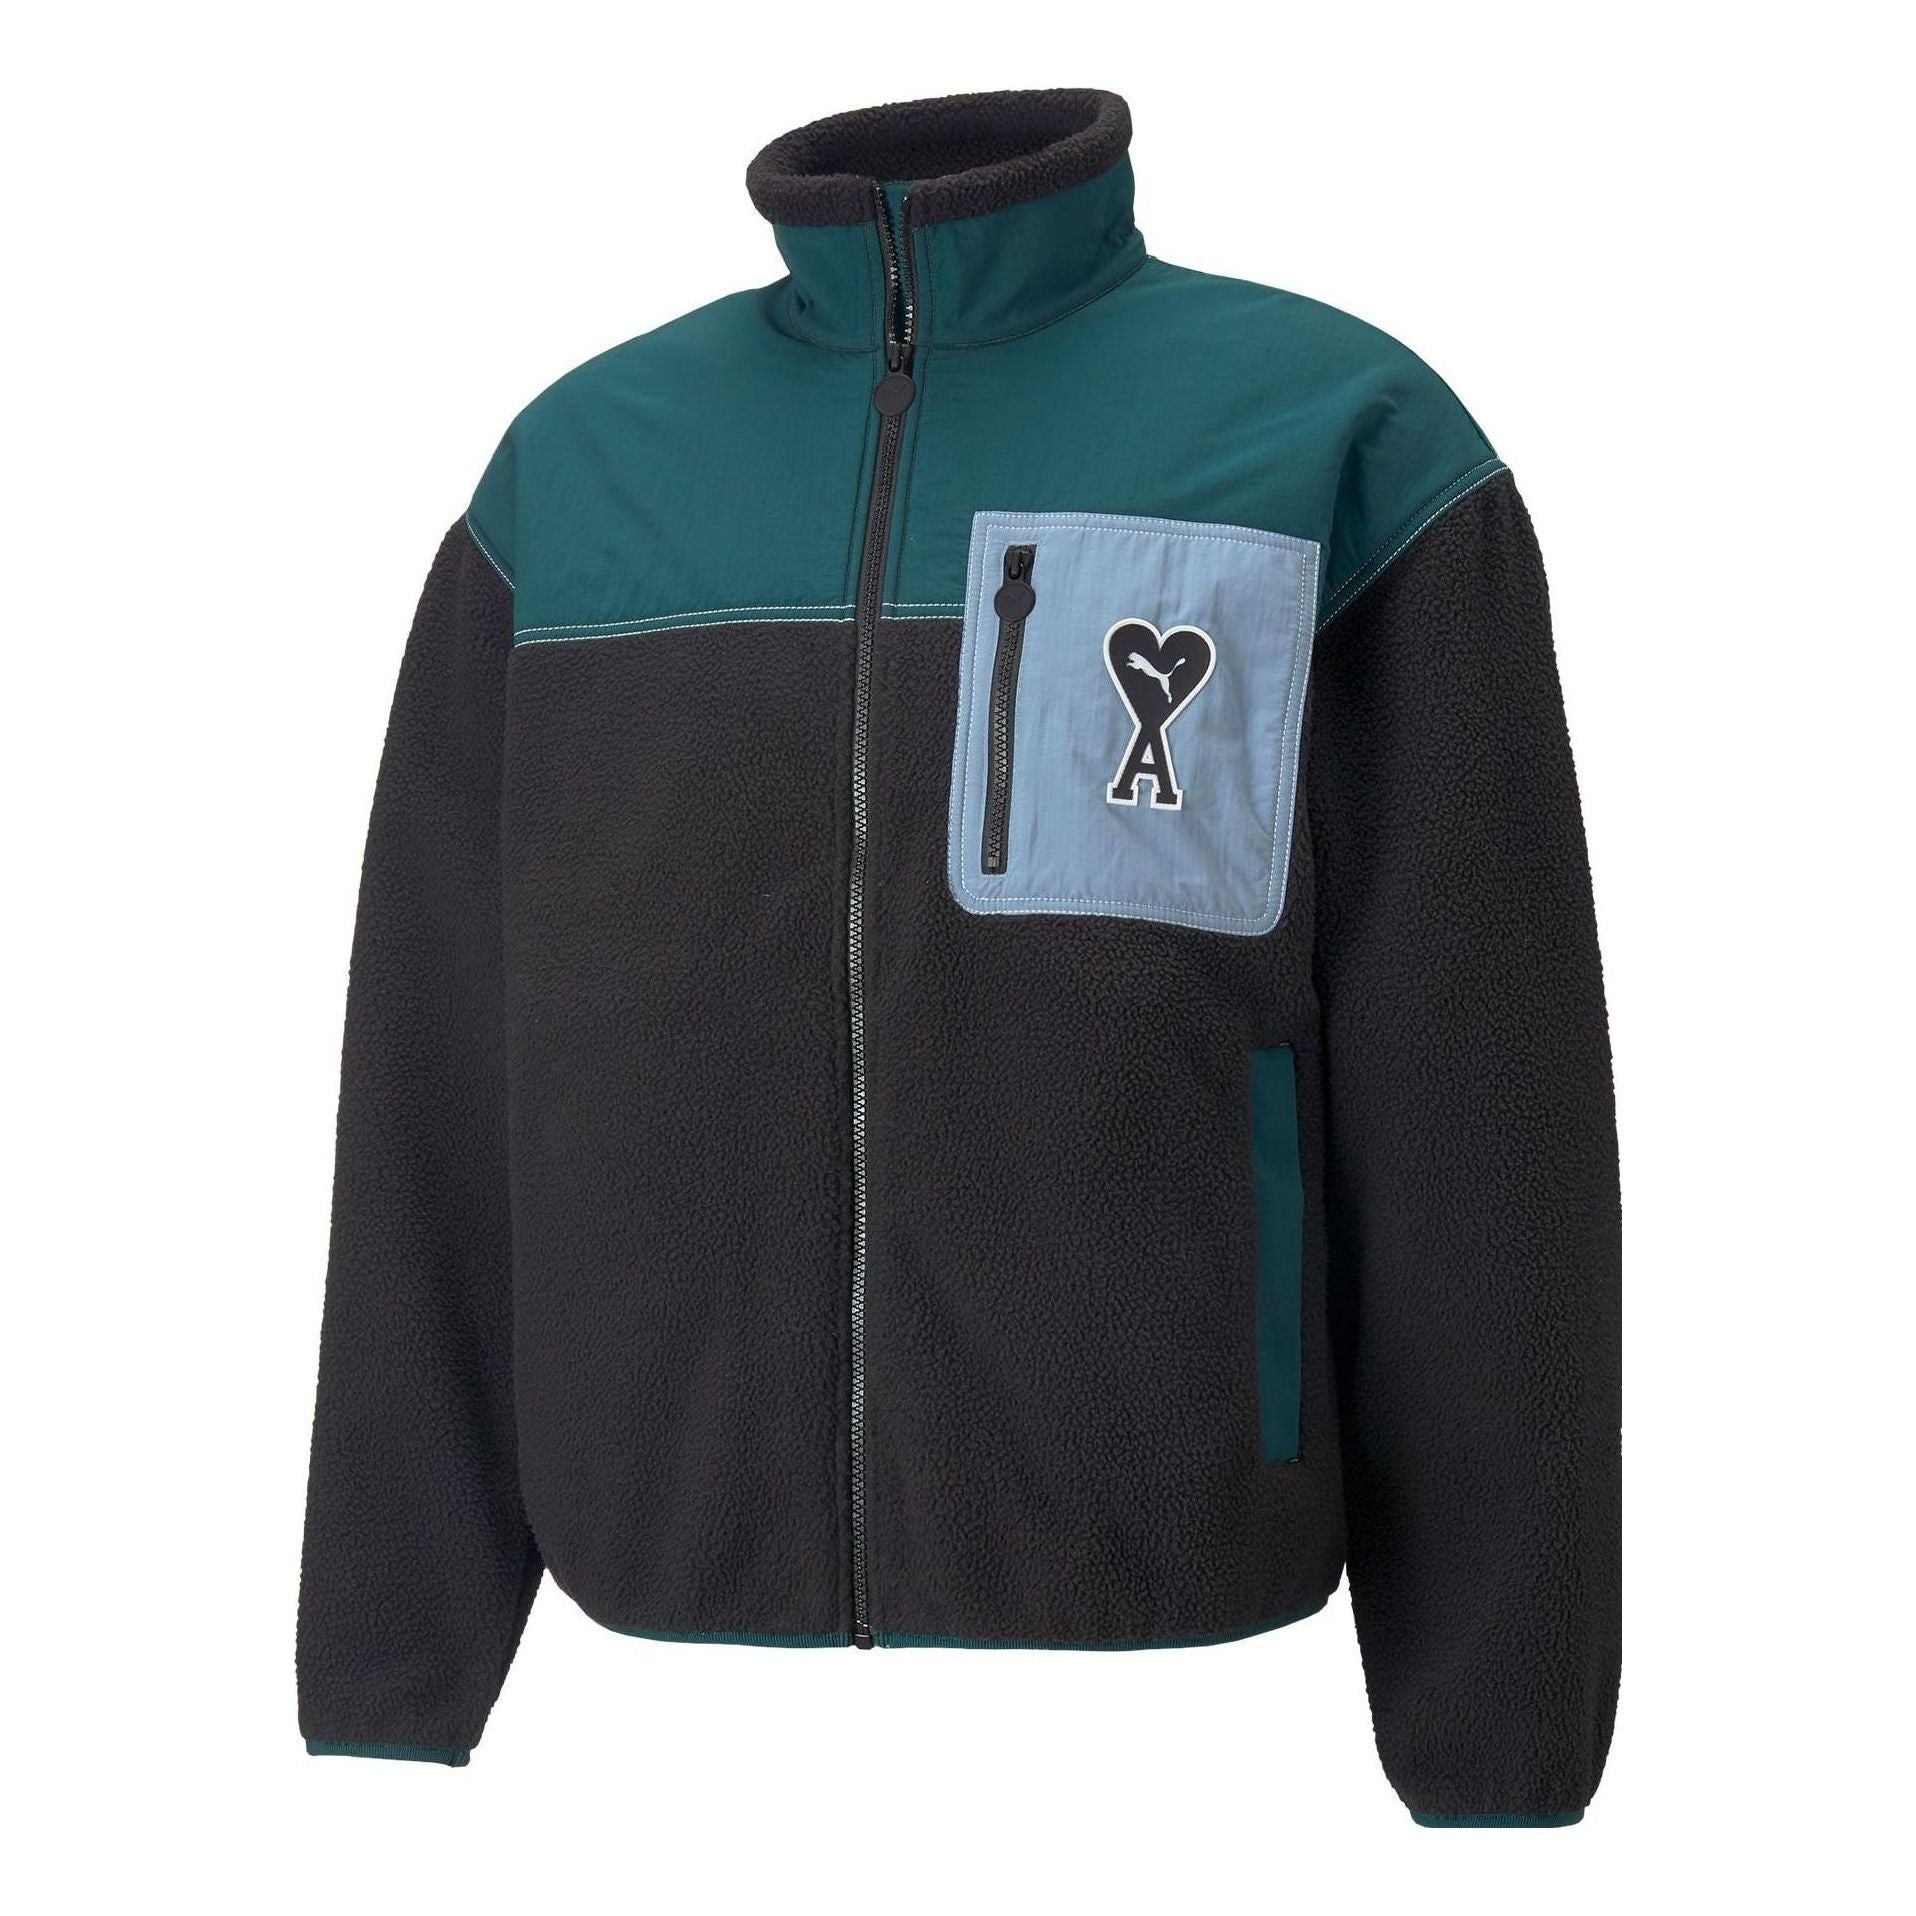 PUMA X AMI Sherpa Jacket 'Black' 535998-01 - 1